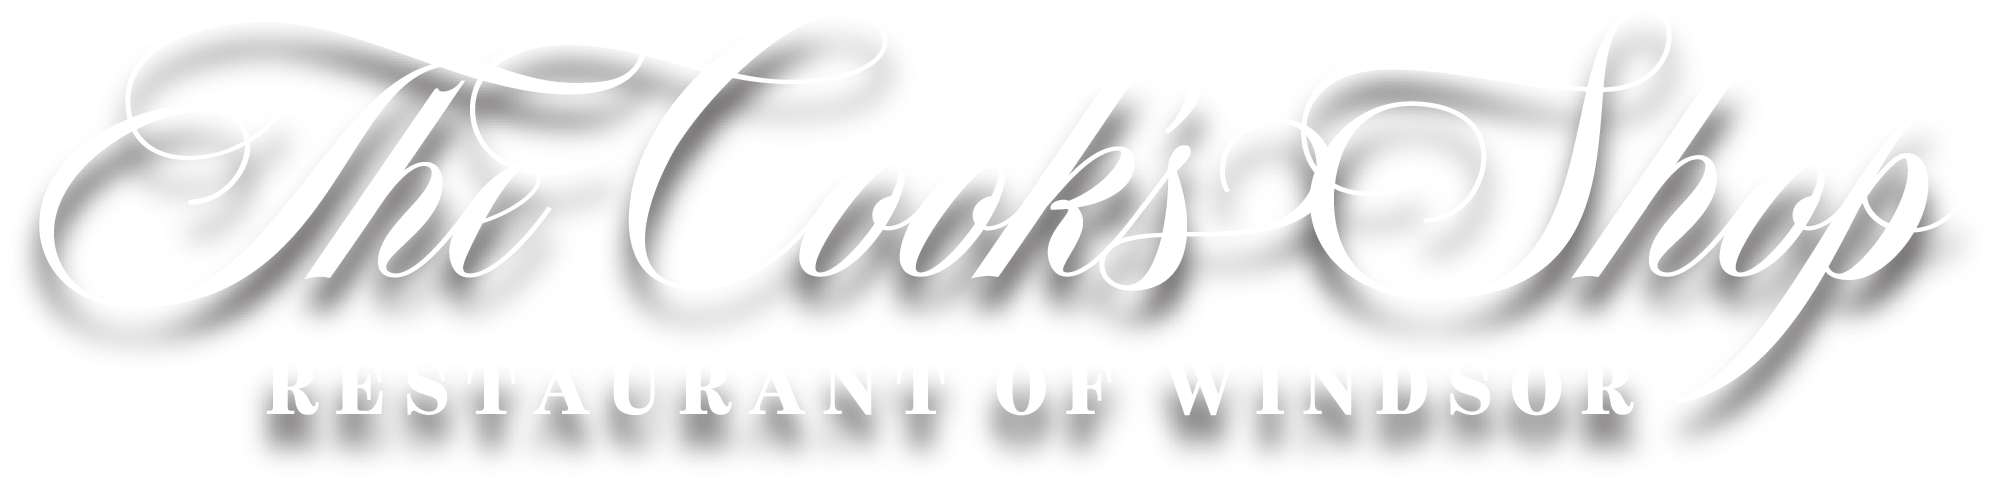 The Cook's Shop Wordmark and caption restaurant of Windsor